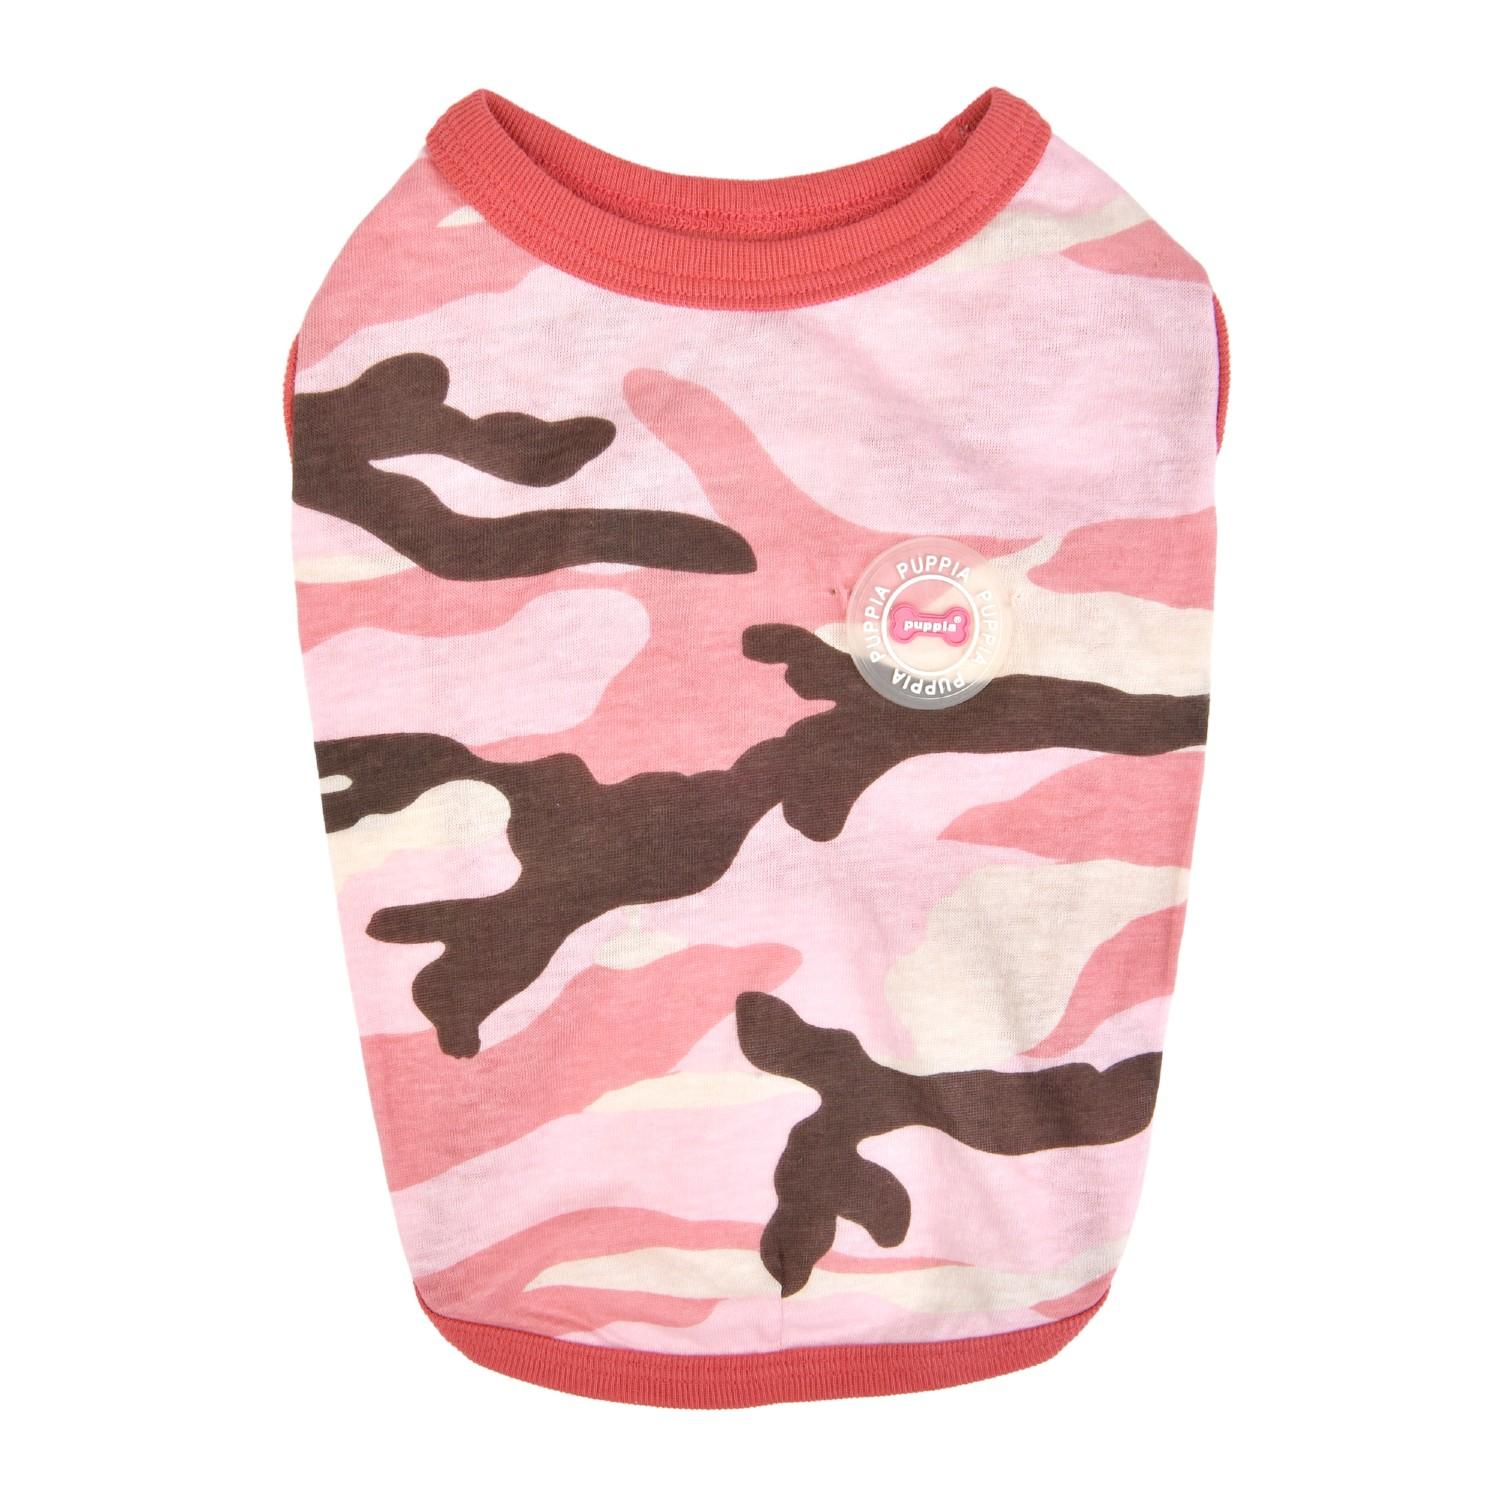 Lance Dog Shirt by Puppia - Pink Camo